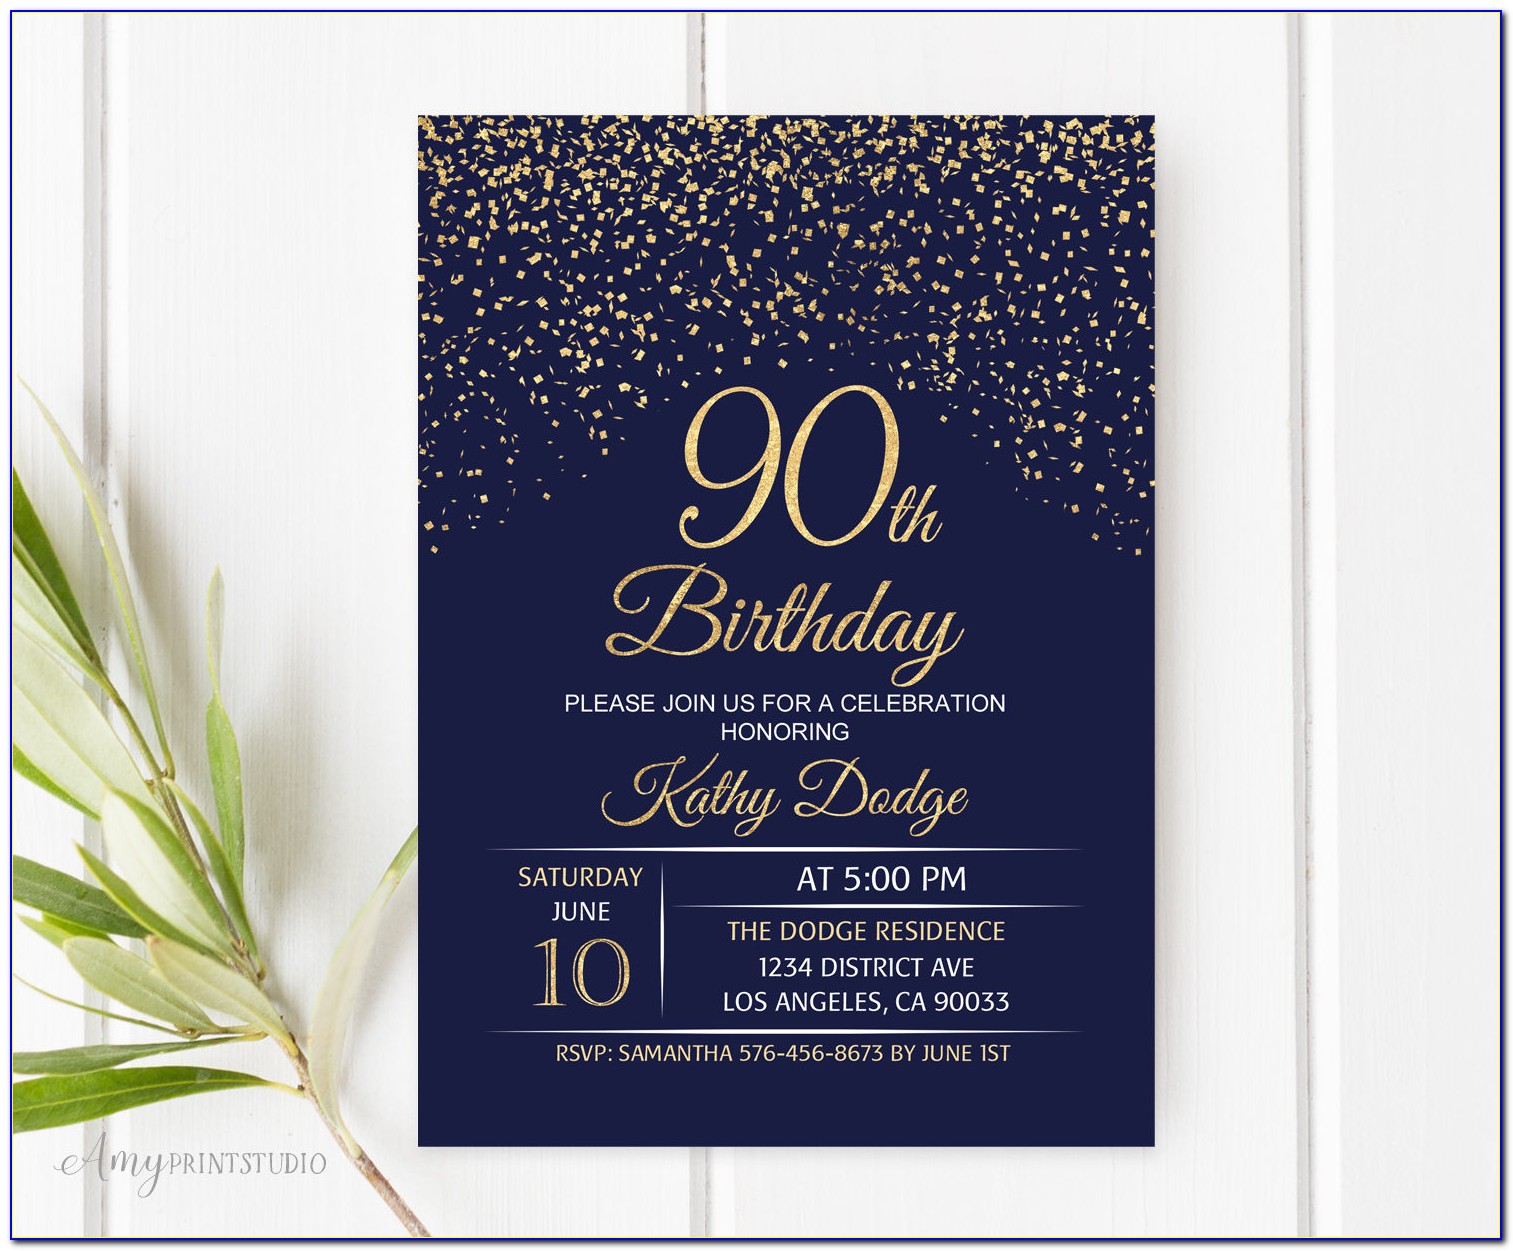 90th Birthday Invitations Australia